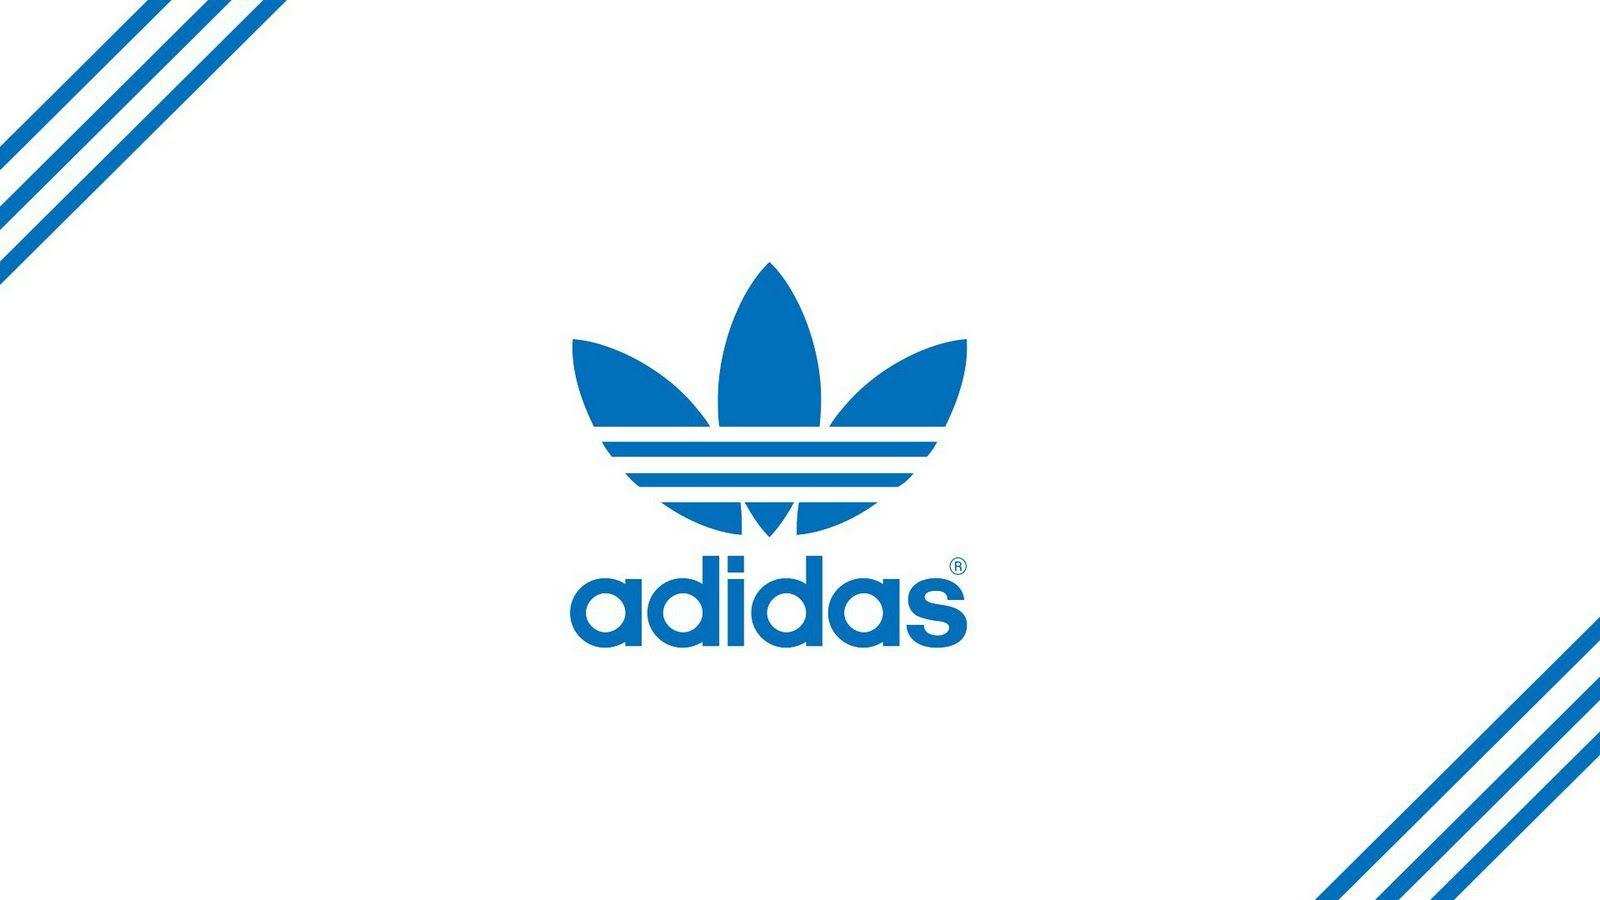 Adidas logo Wallpapers 13 109943 Image HD Wallpapers